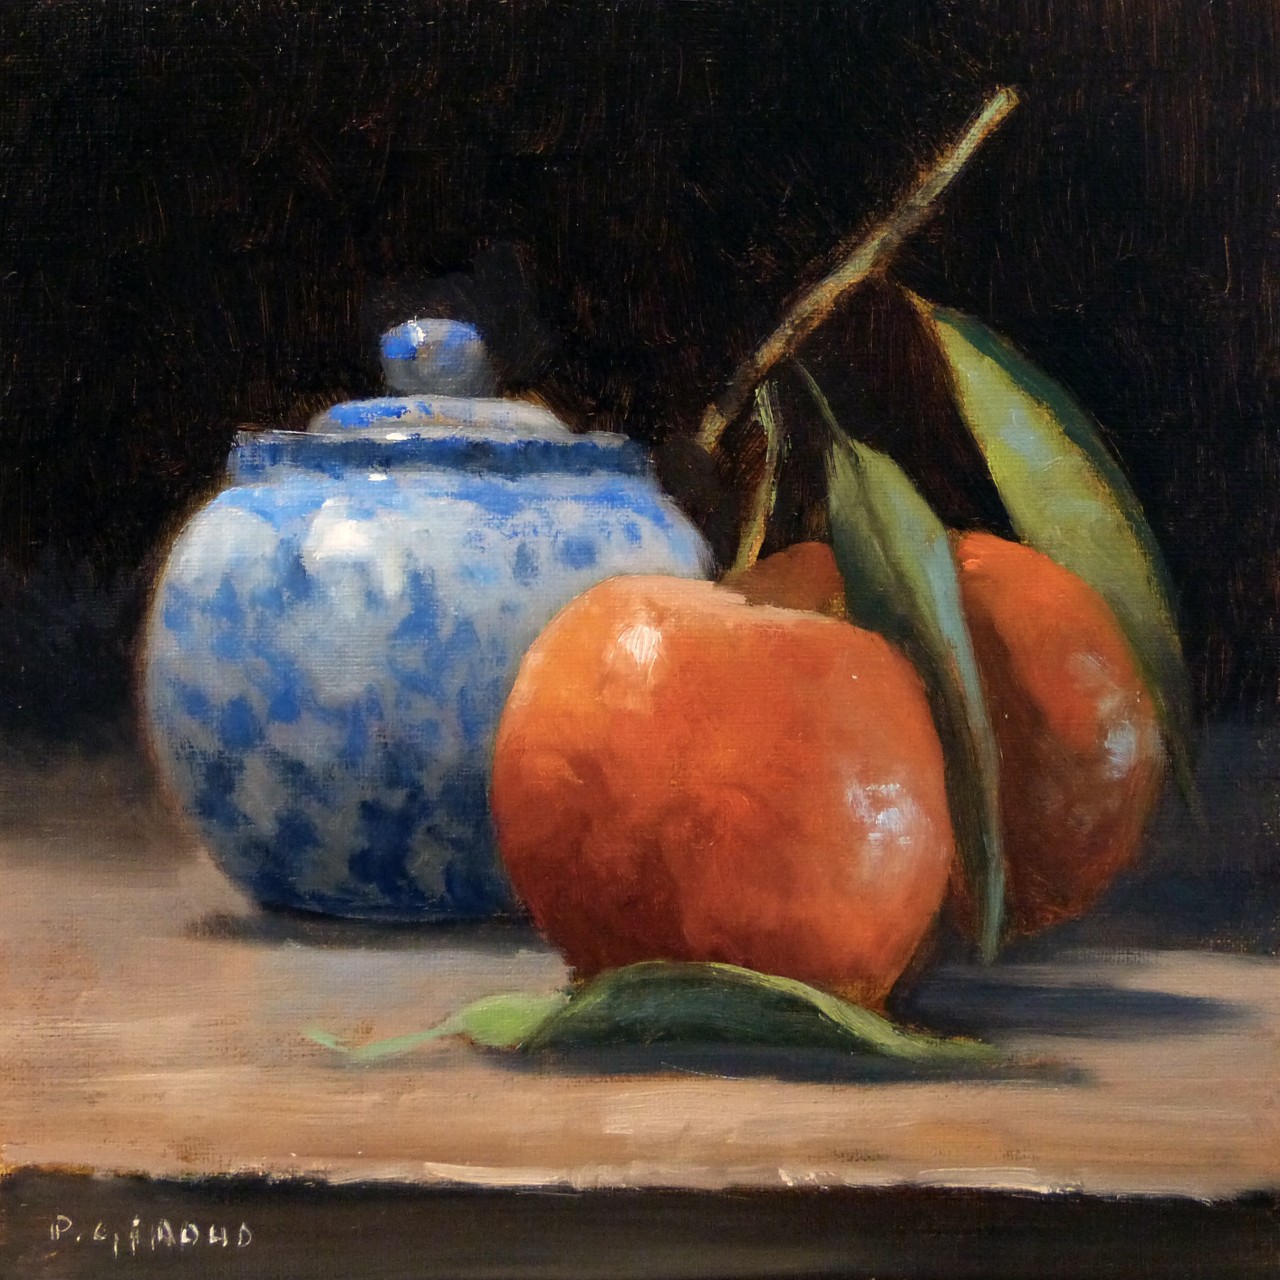 Peinture : Mandarines